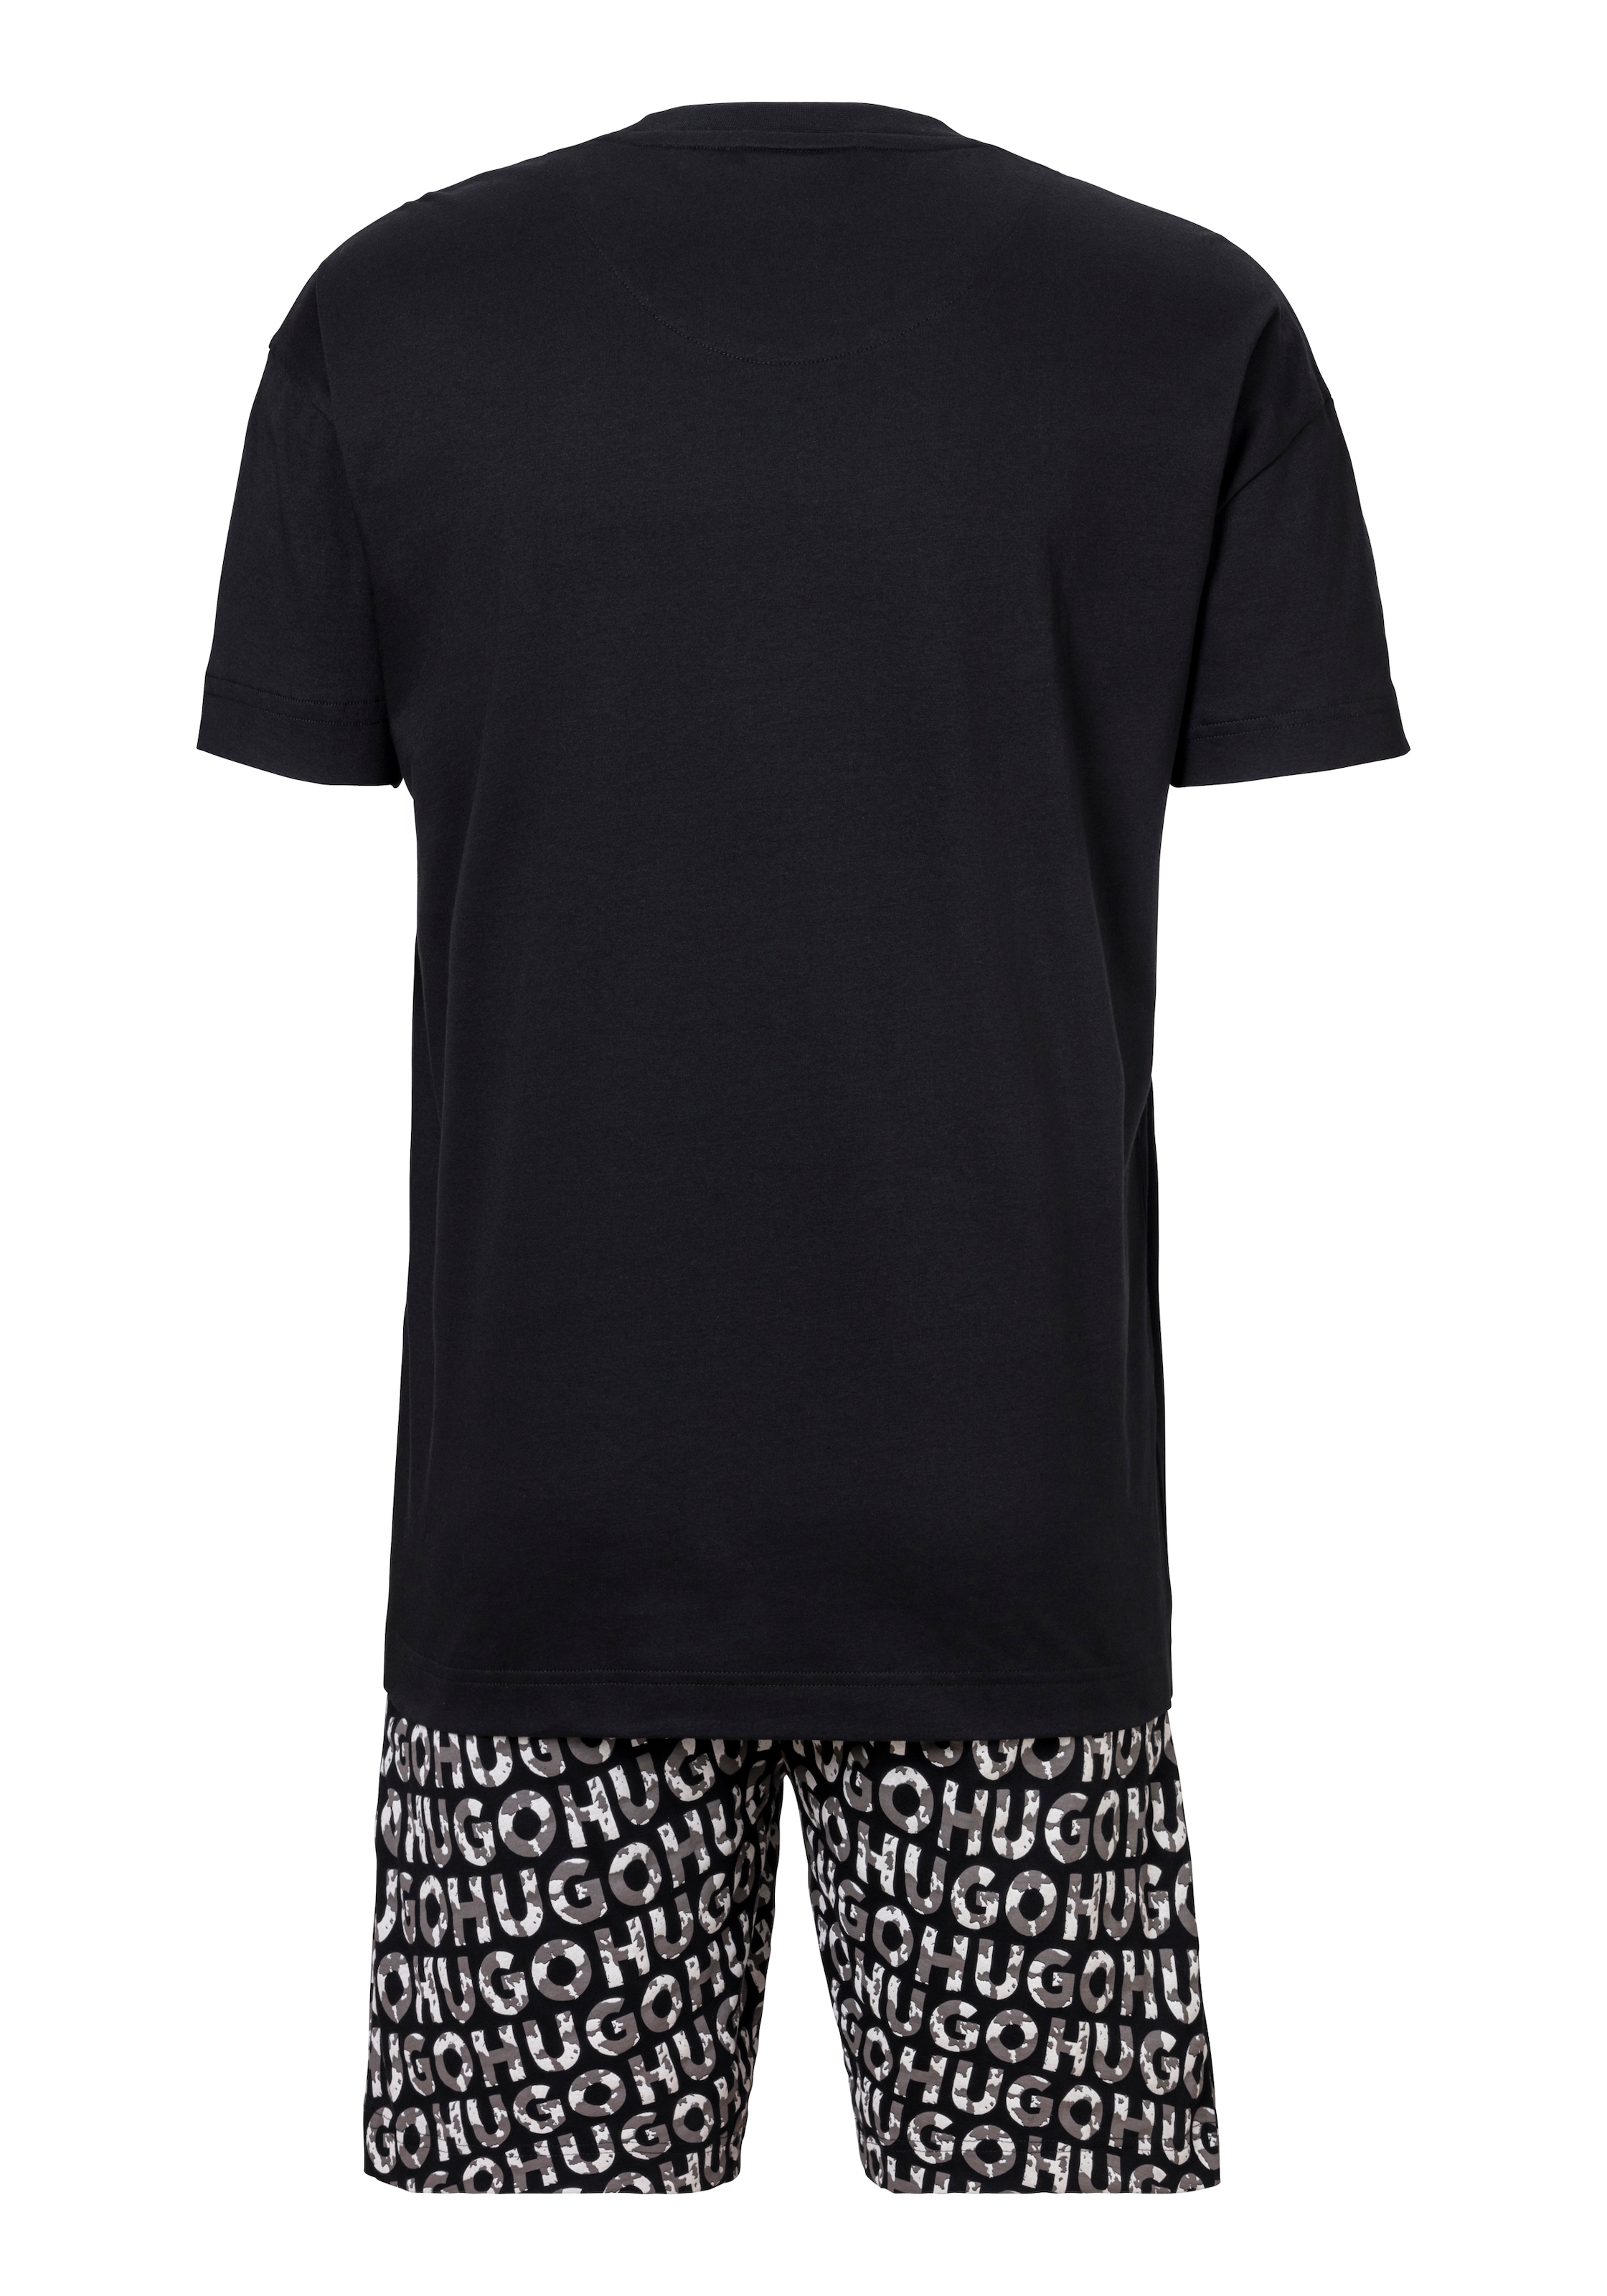 HUGO Underwear Pyjama »Camo Logo Short Set«, (Set, 2 tlg., 2er), mit grossem Logodruck